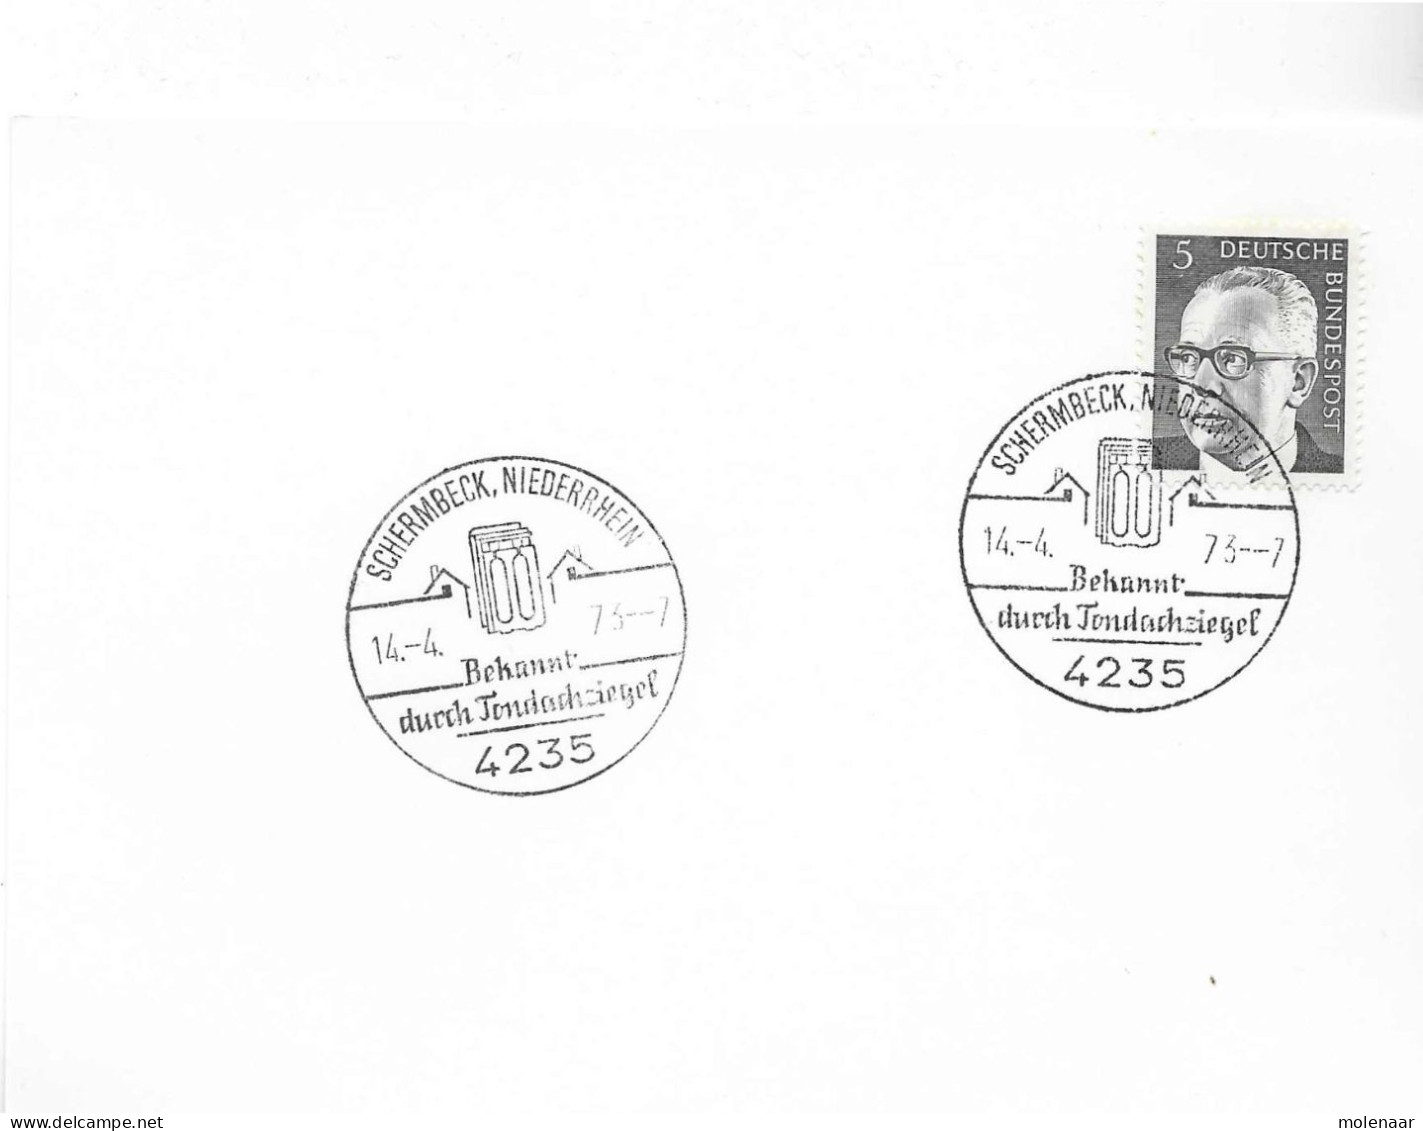 Postzegels > Europa > Duitsland > West-Duitsland > 1970-1979 >kaart Met No. 635 (17399) - Covers & Documents